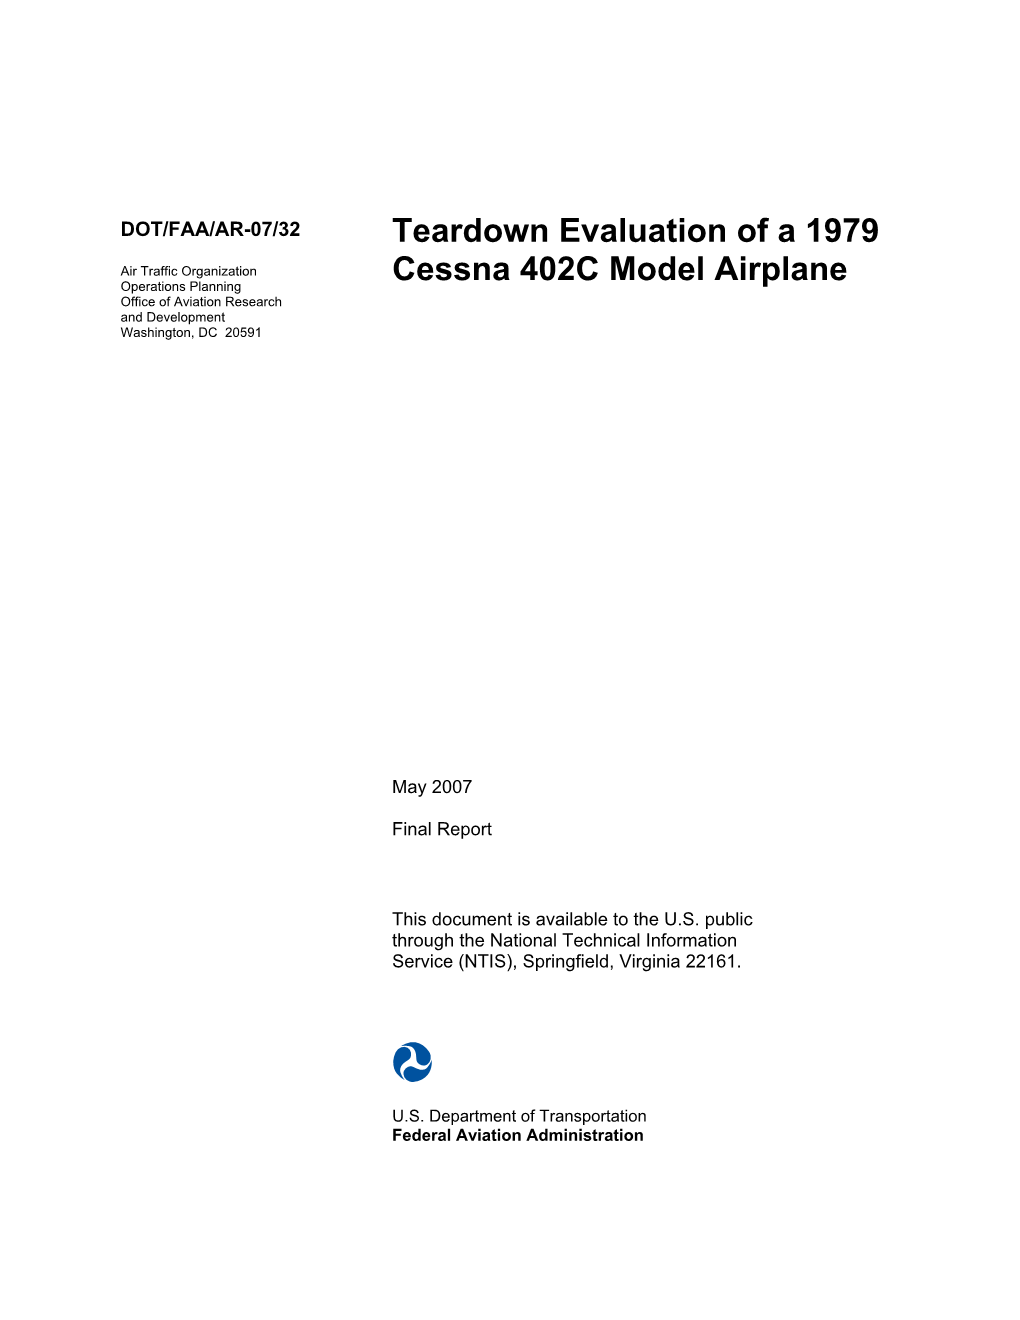 Teardown Evaluation of the 1979 Cessna 402C Model Aircraft